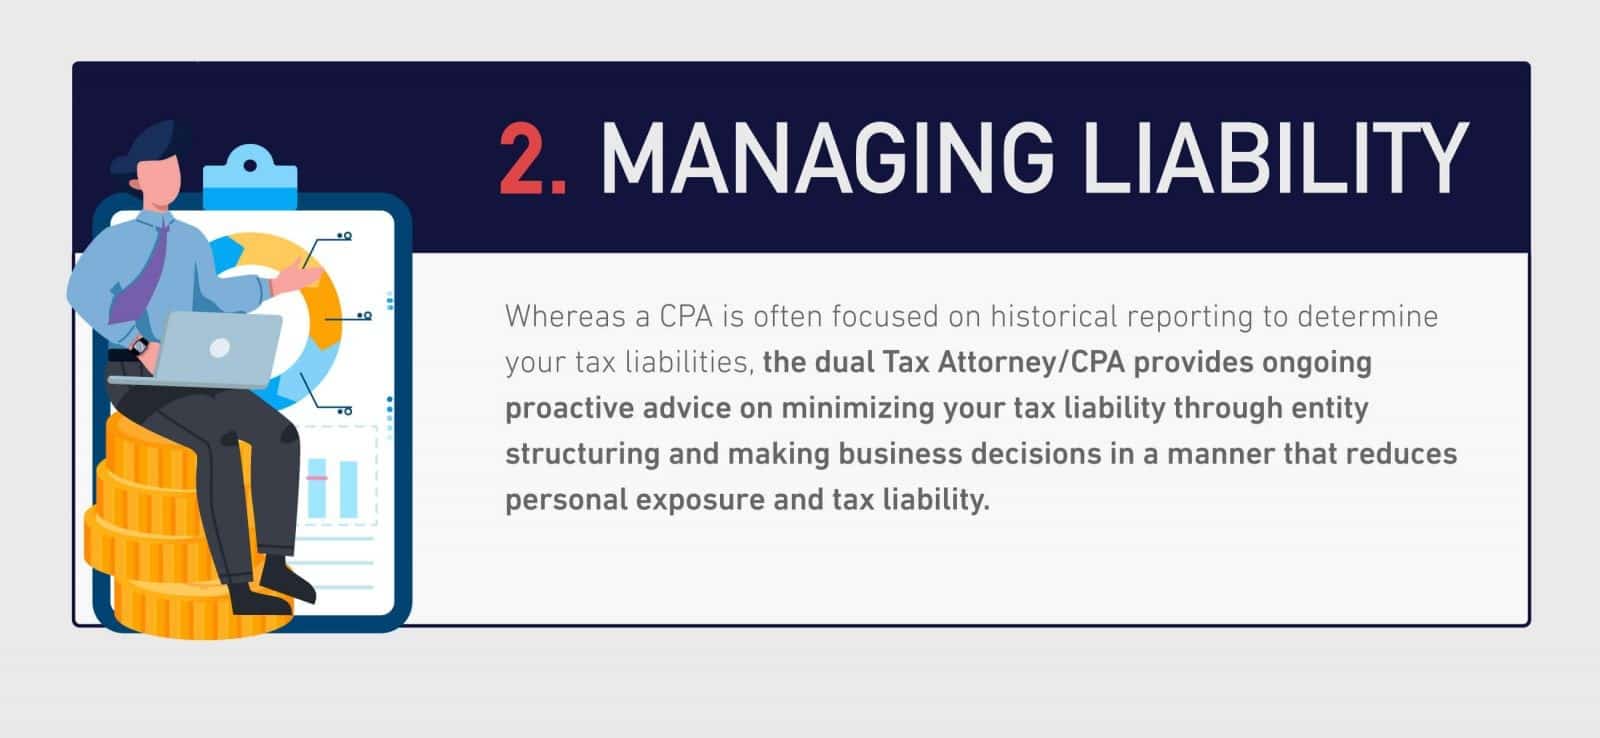 Managing-liability-klasing-associates-oxnard-tax-attorney